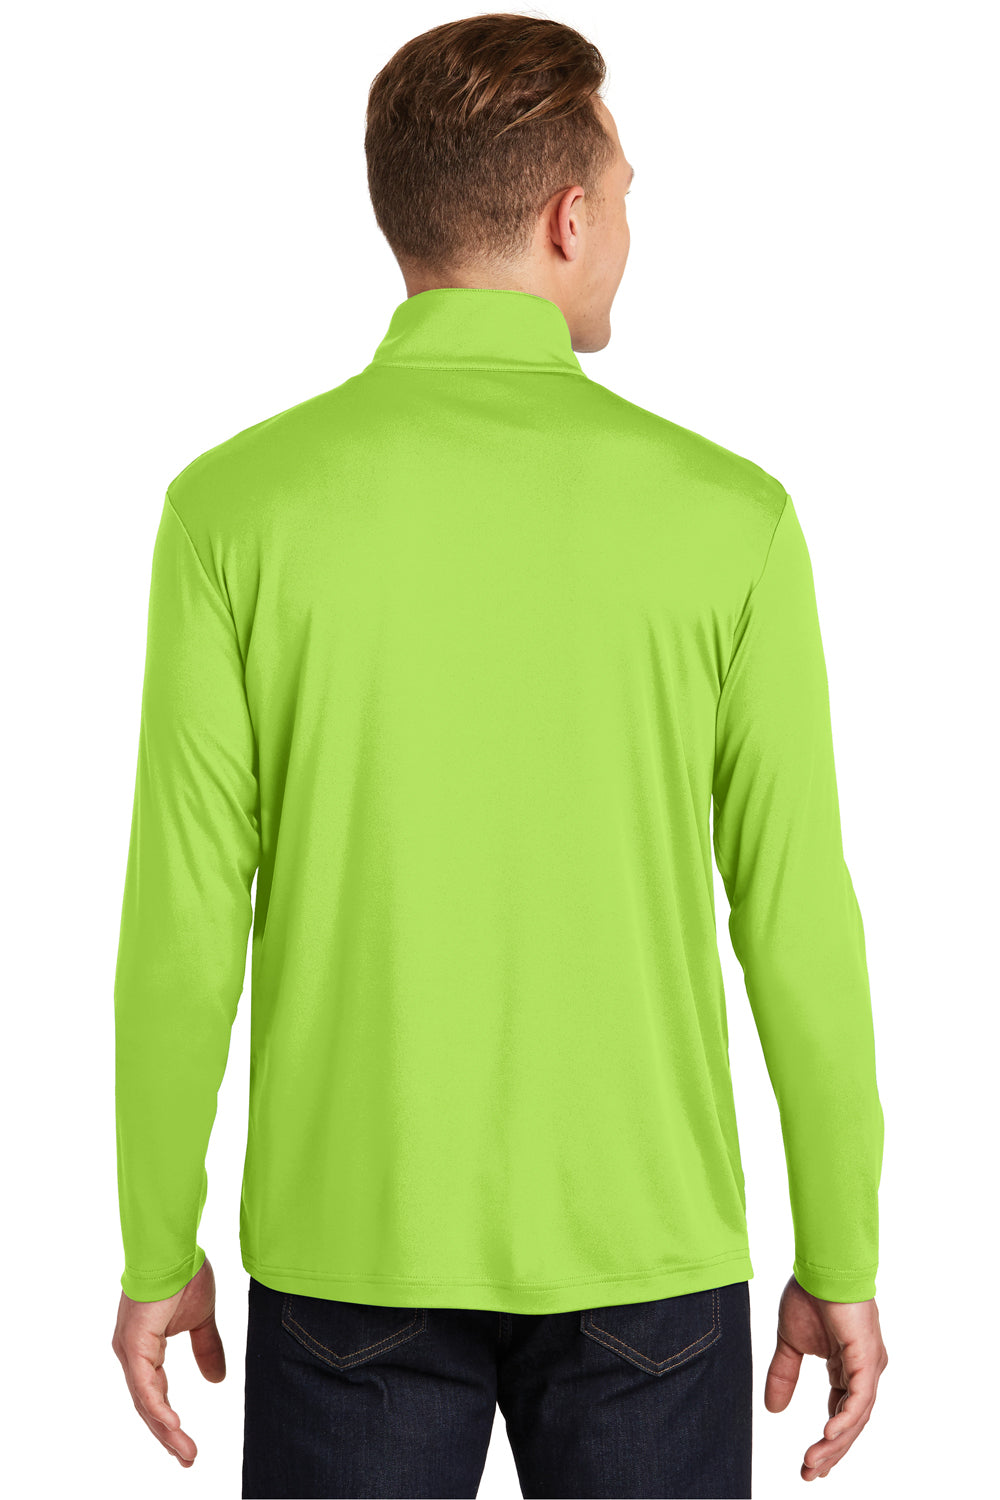 Sport-Tek ST357 Mens Competitor Moisture Wicking 1/4 Zip Sweatshirt Lime Green Back